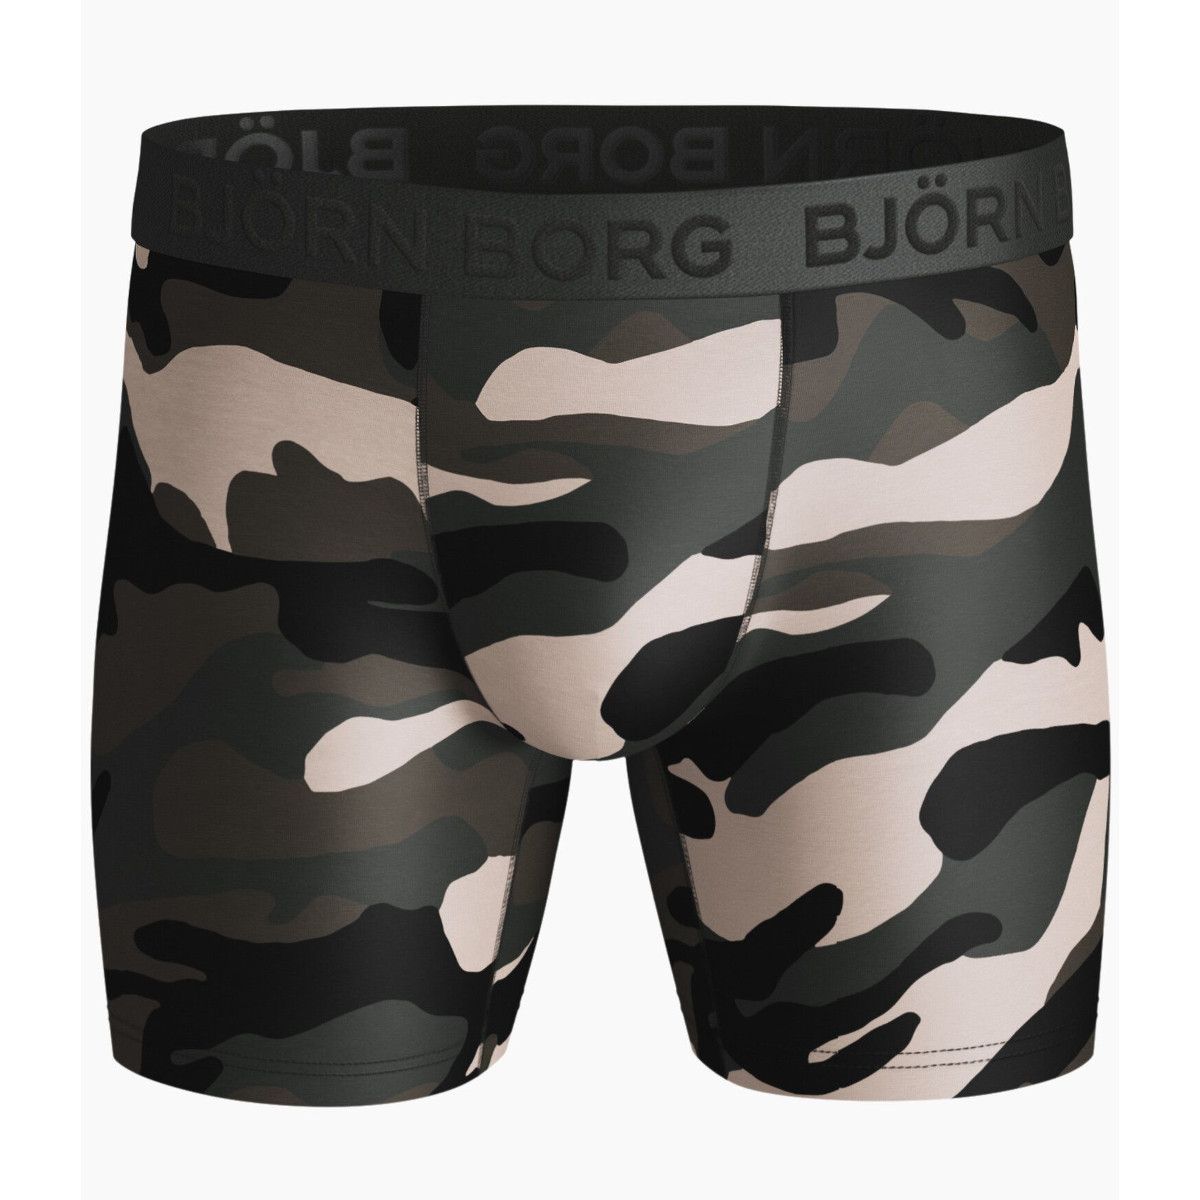 Bjorn Borg Peaceful Per Performance Men's Boxer Shorts 9999-